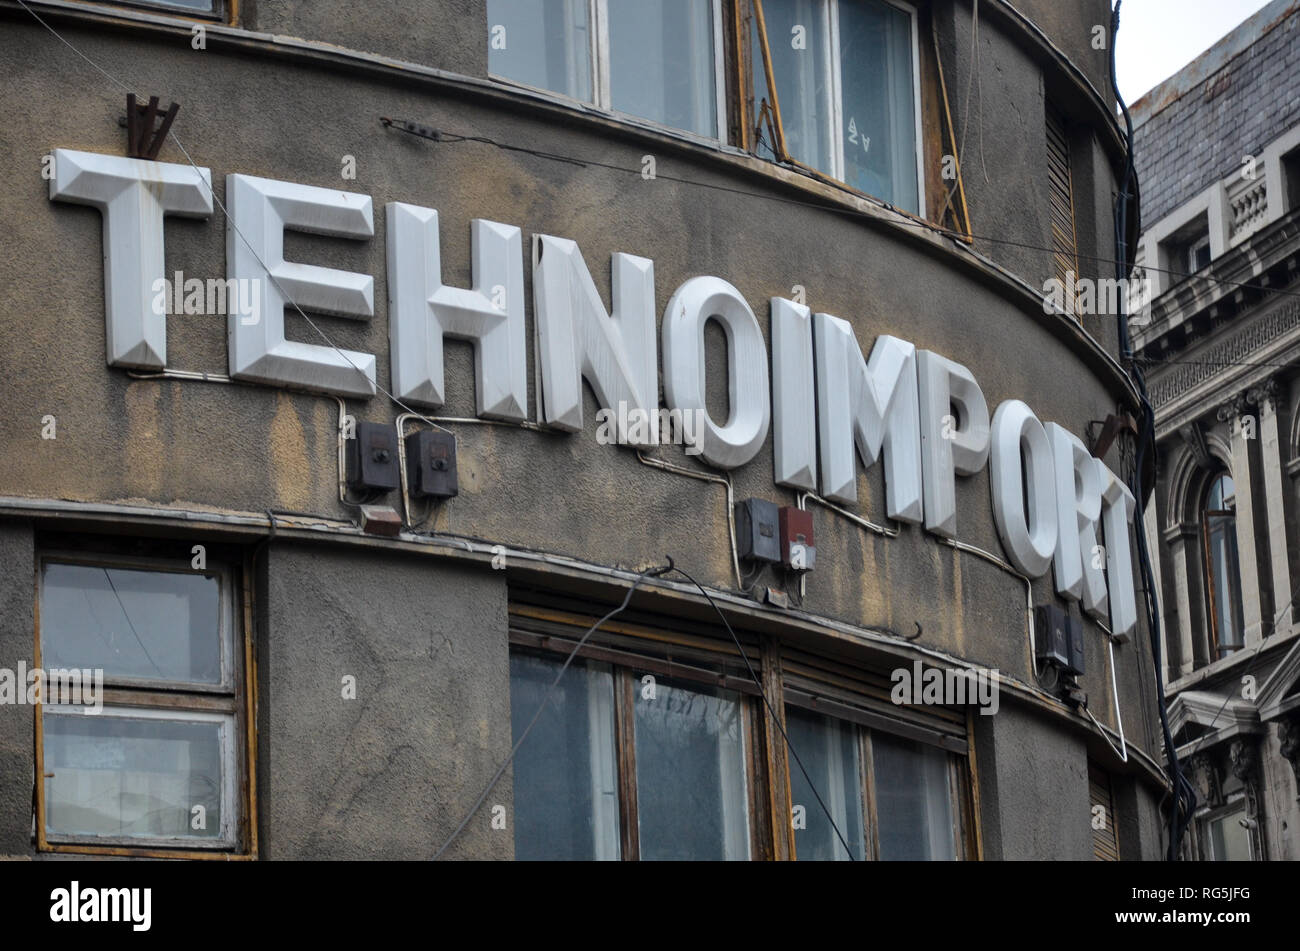 Technoimport Building, Bucharest, Romania, November 2018 Stock Photo